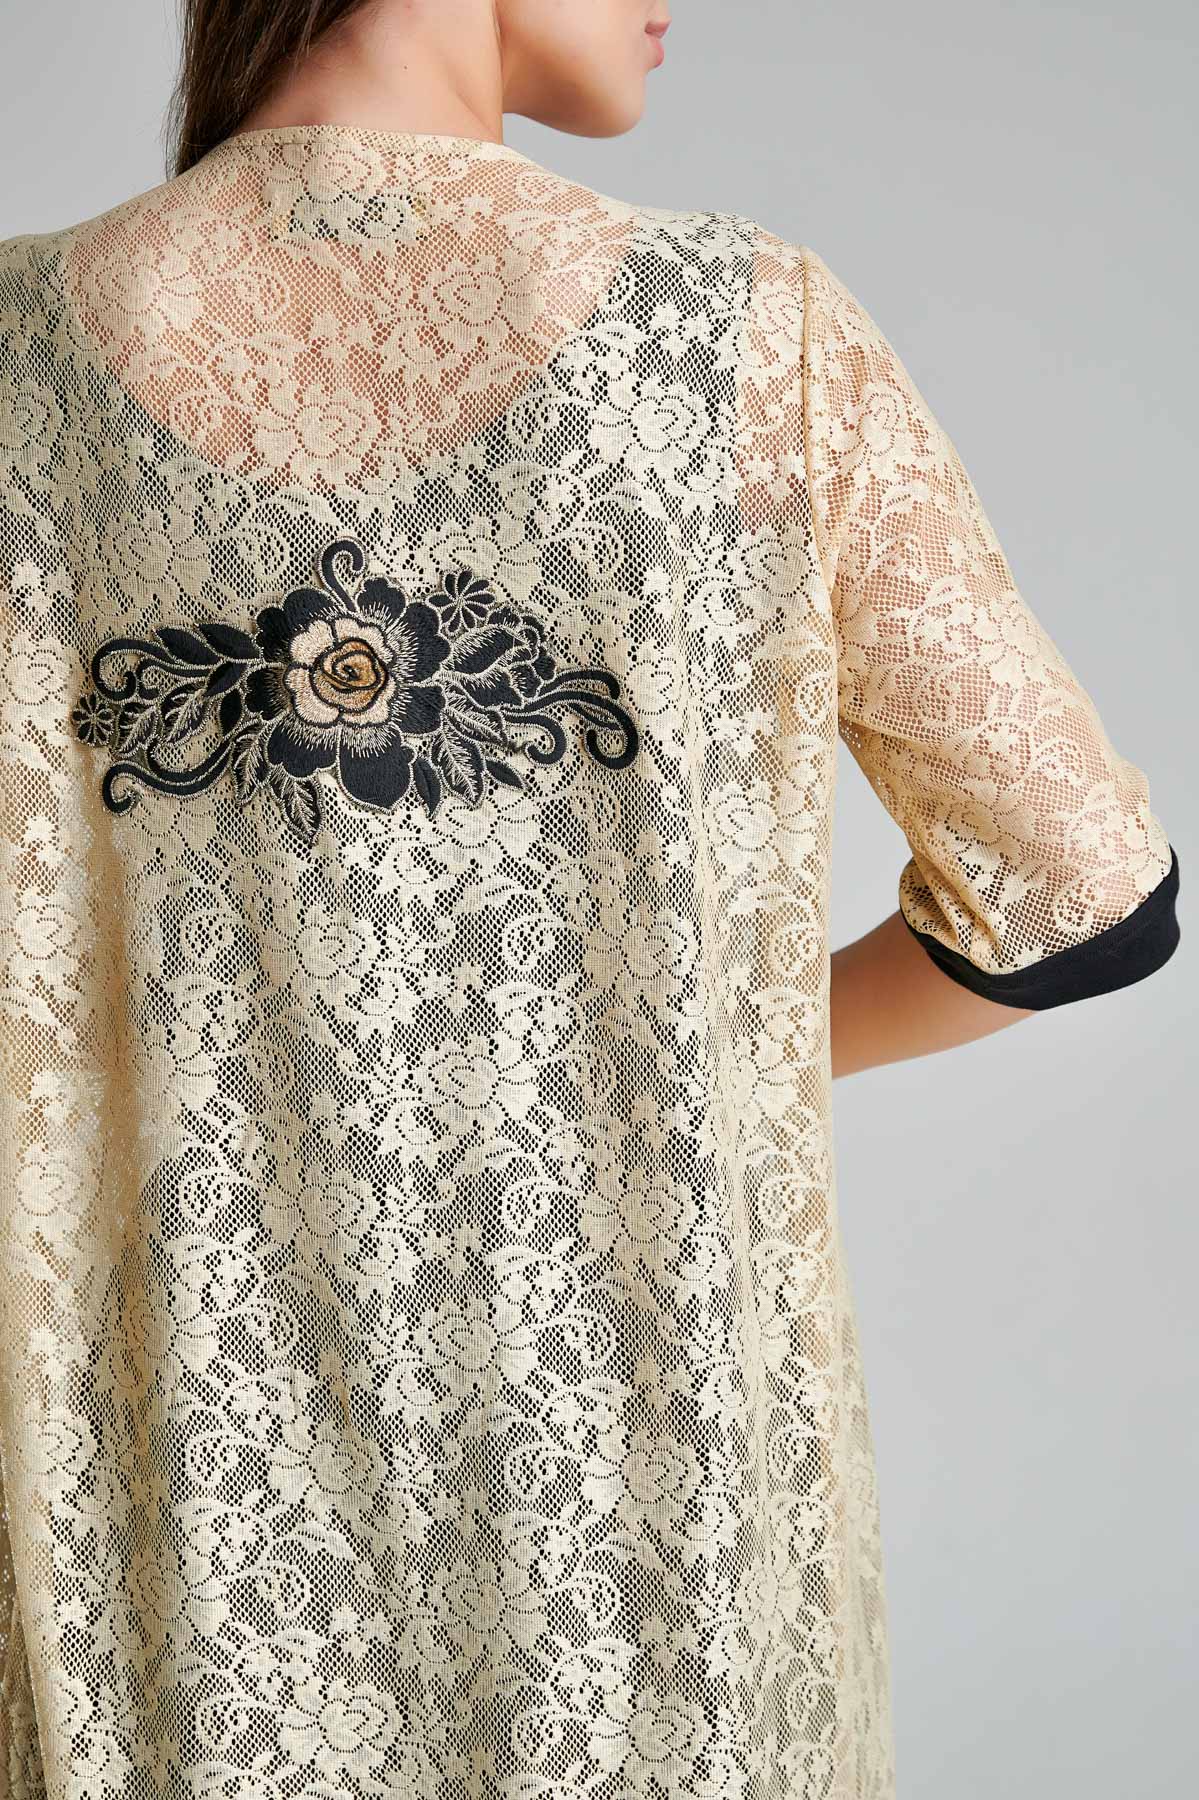 DITTA Top maxi skirt with black drawstring. Natural fabrics, original design, handmade embroidery